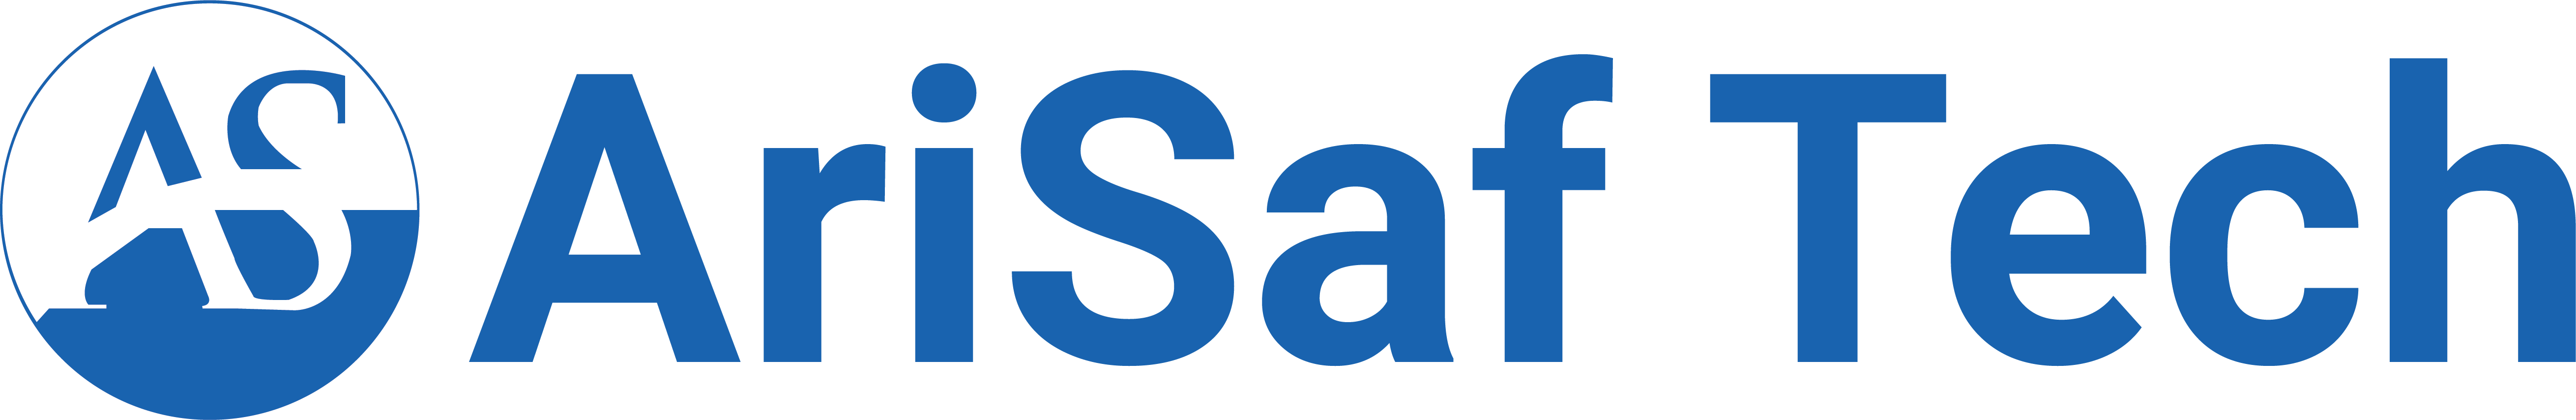 AST logo without ltd